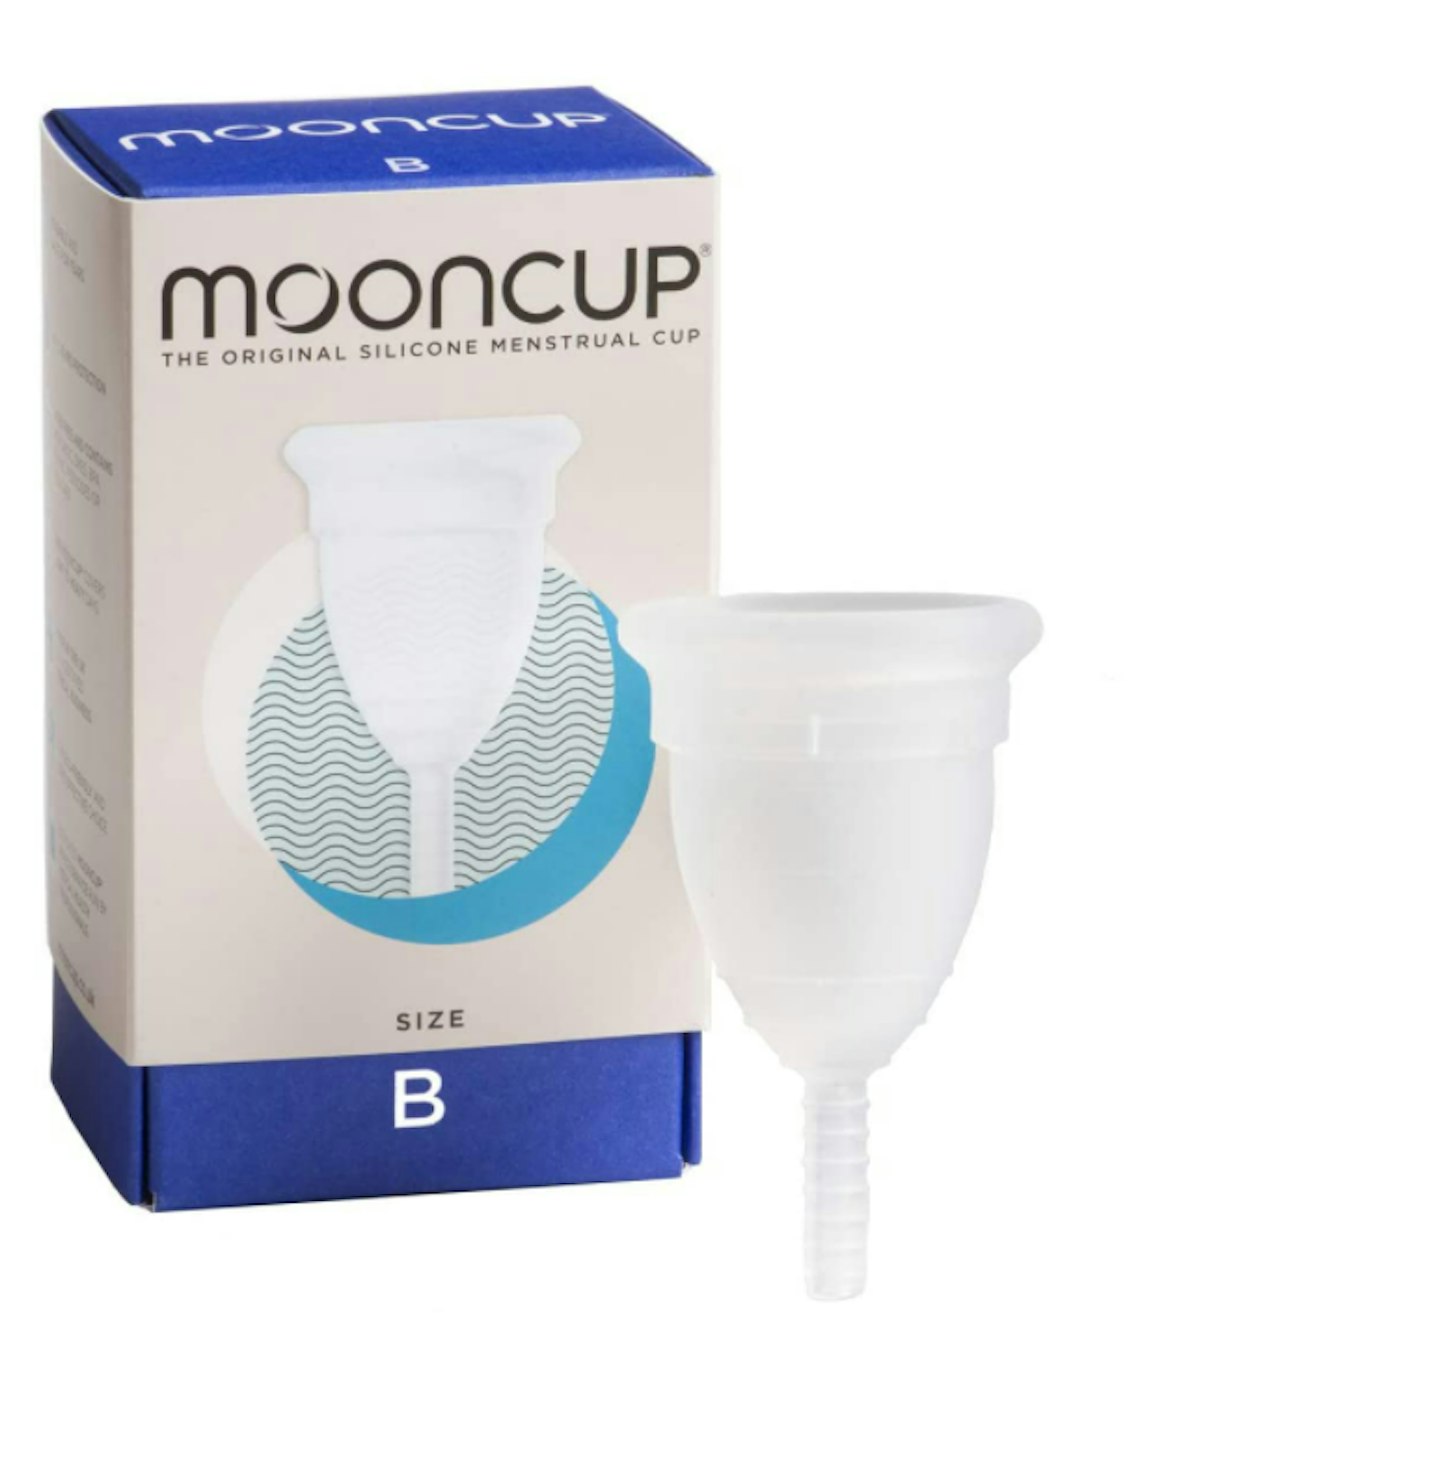 Mooncupu The Original Silicone Menstrual Cup